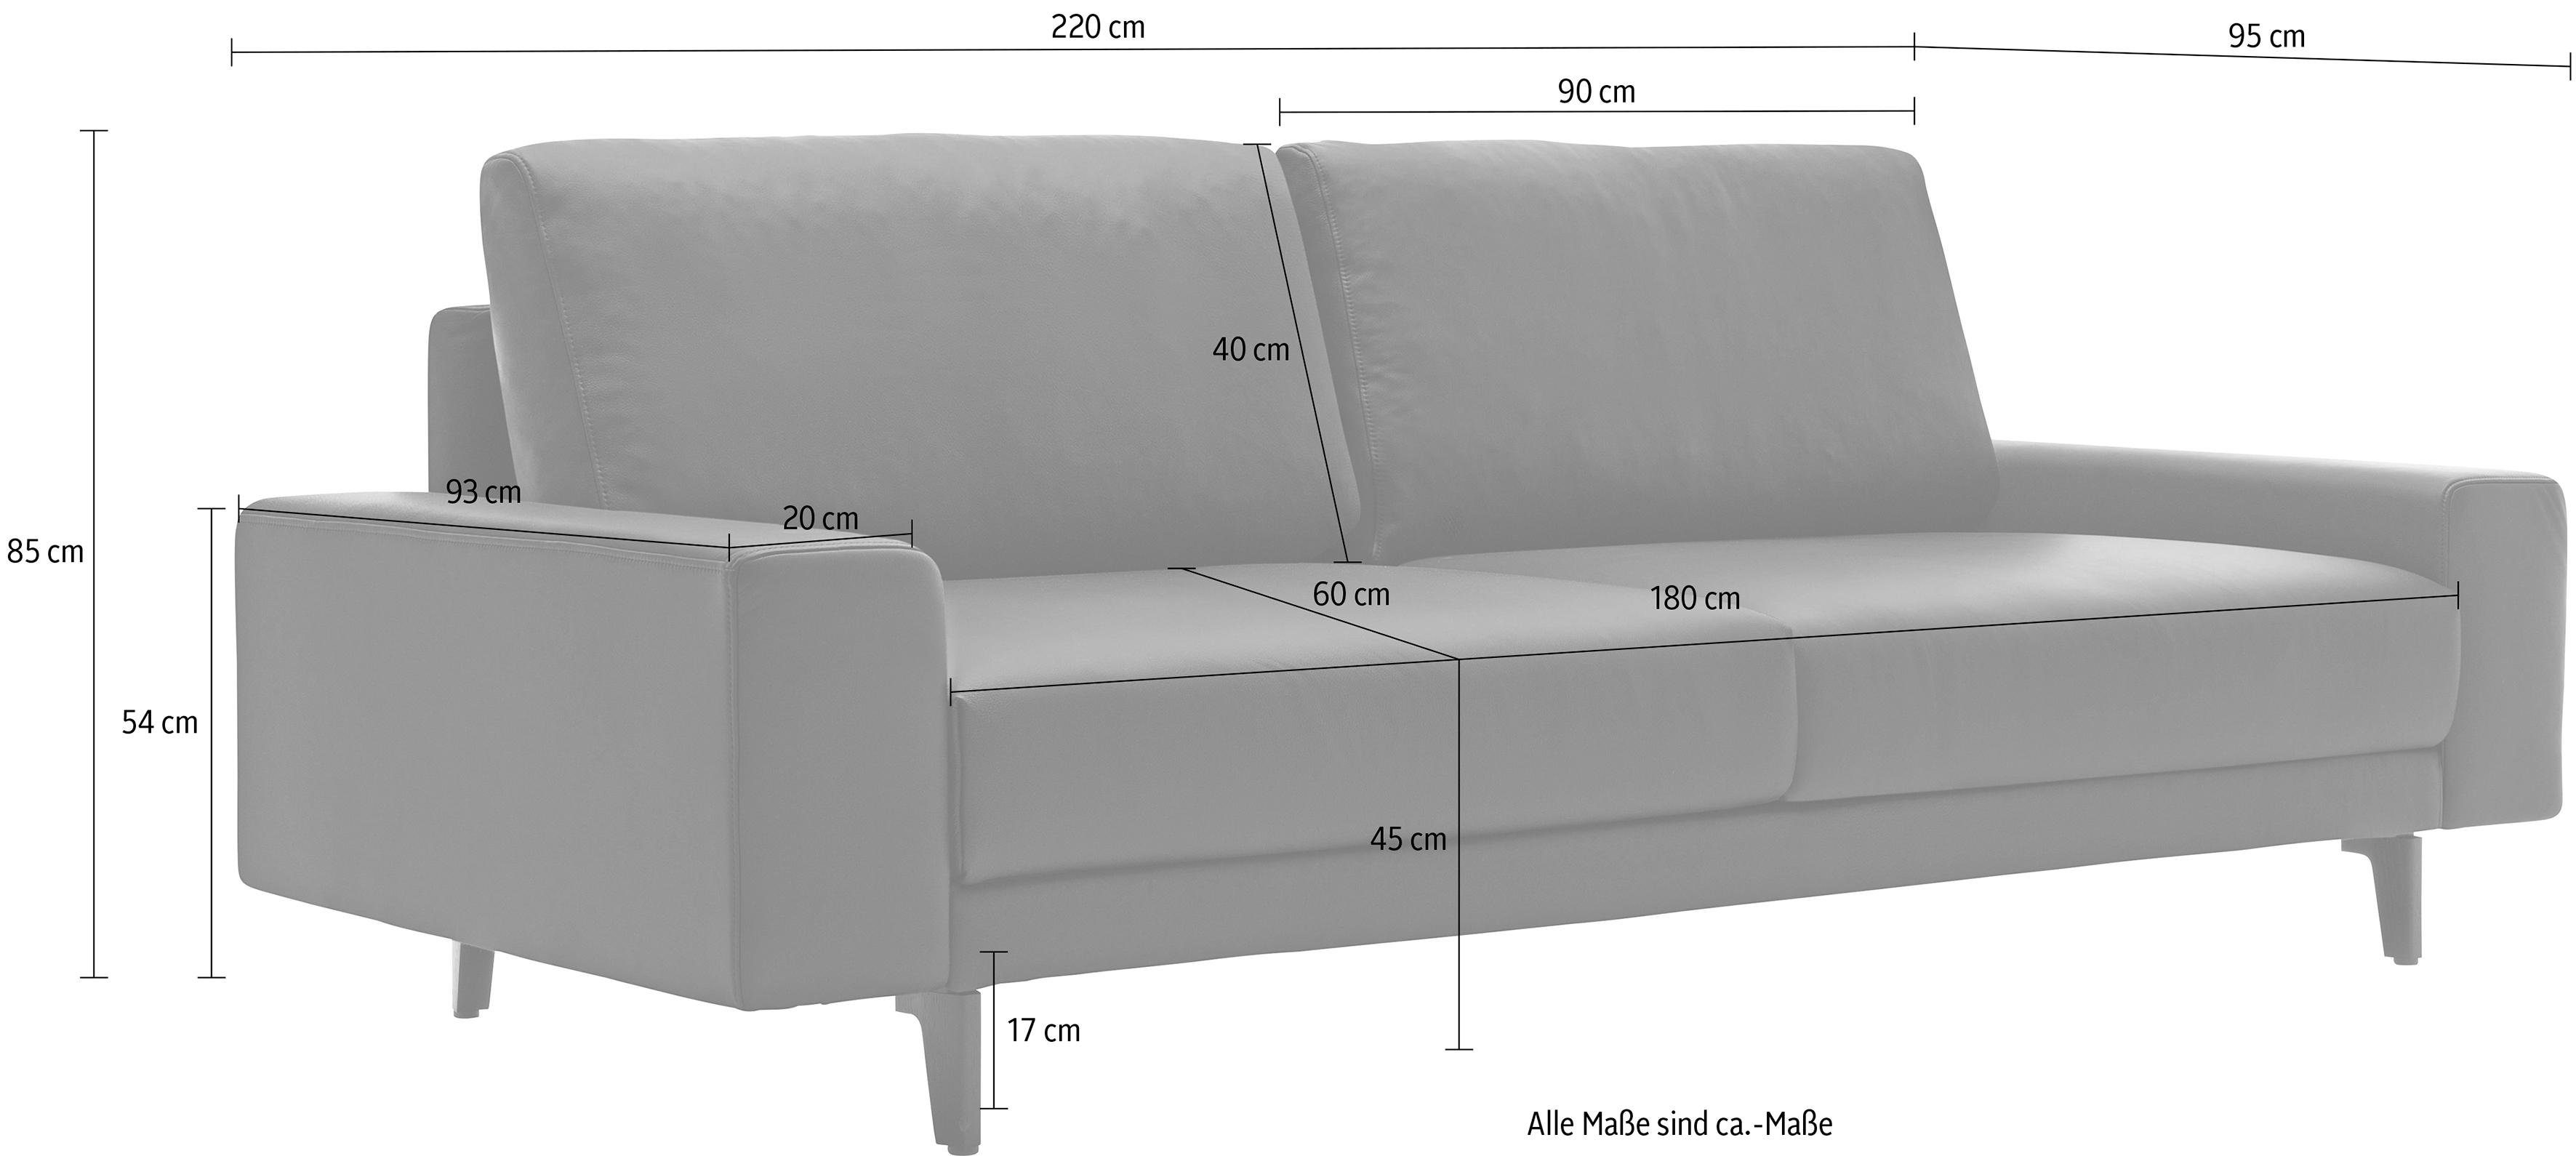 niedrig, umbragrau, sofa in Armlehne breit Alugussfüße 3-Sitzer hülsta 220 hs.450, cm Breite